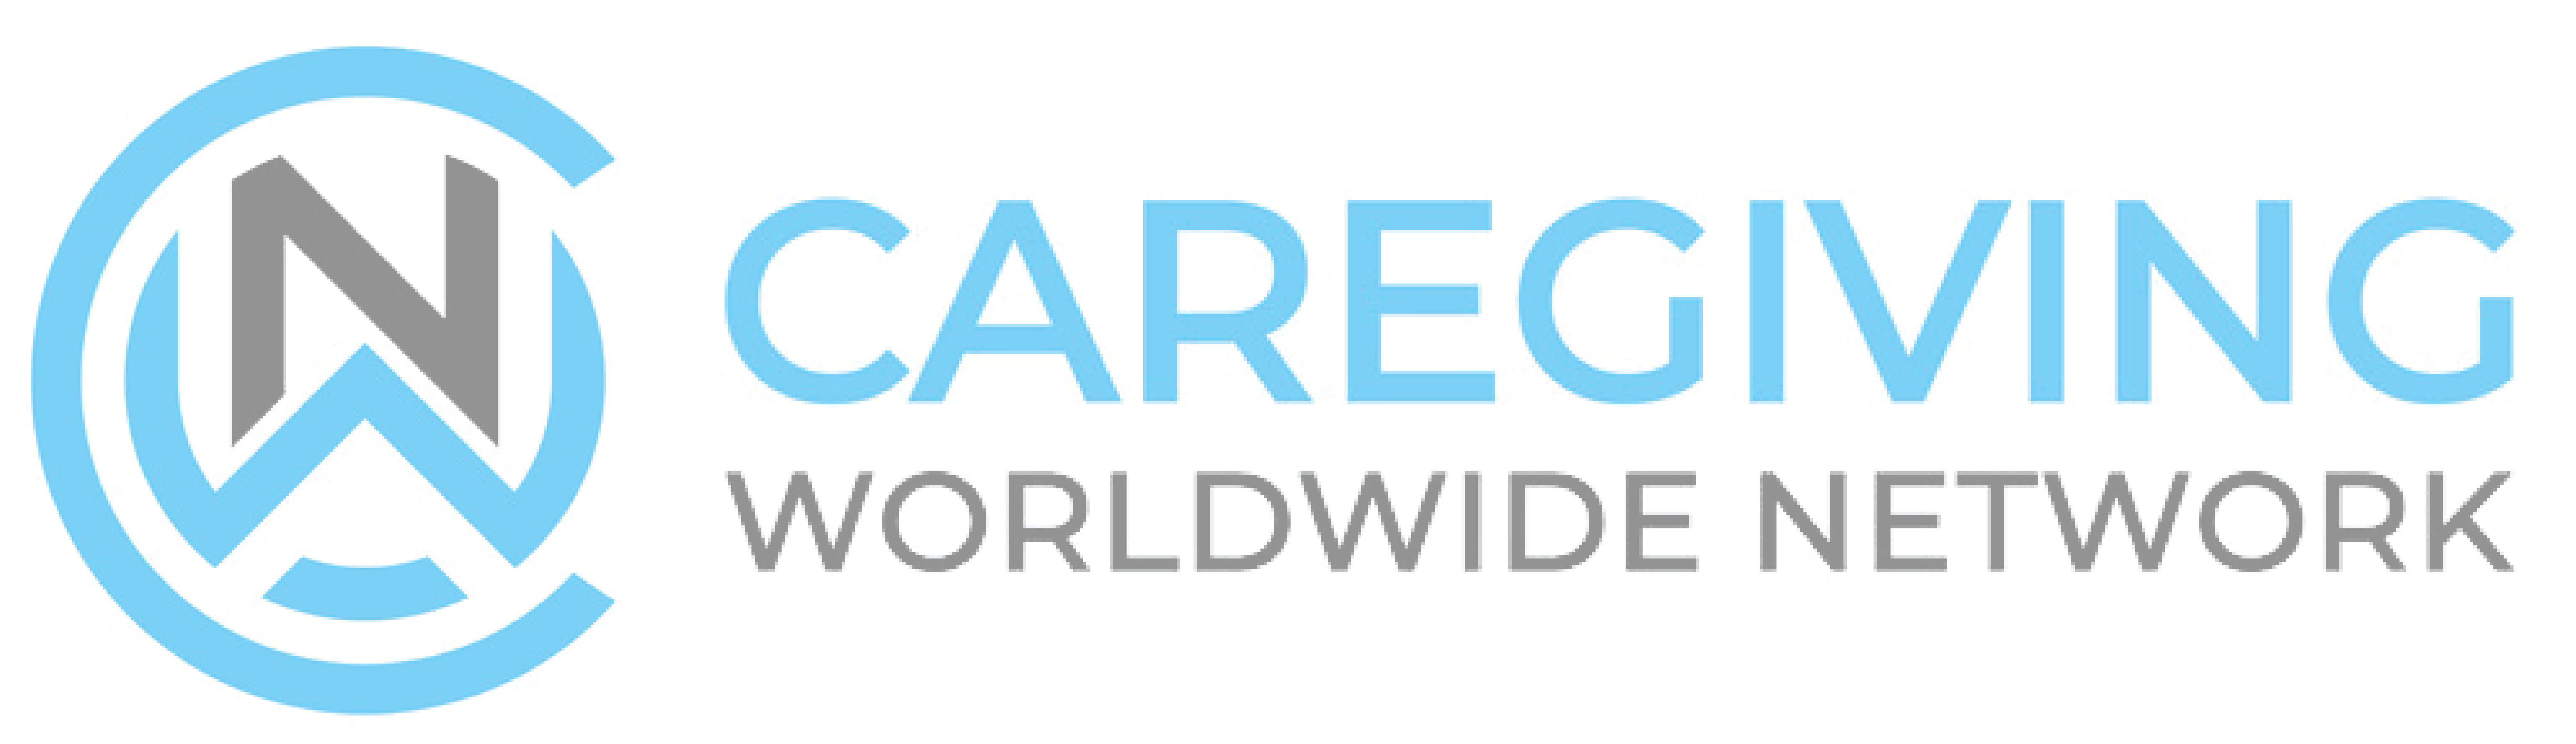 Caregiving Worldwide Logo Horizontal-03